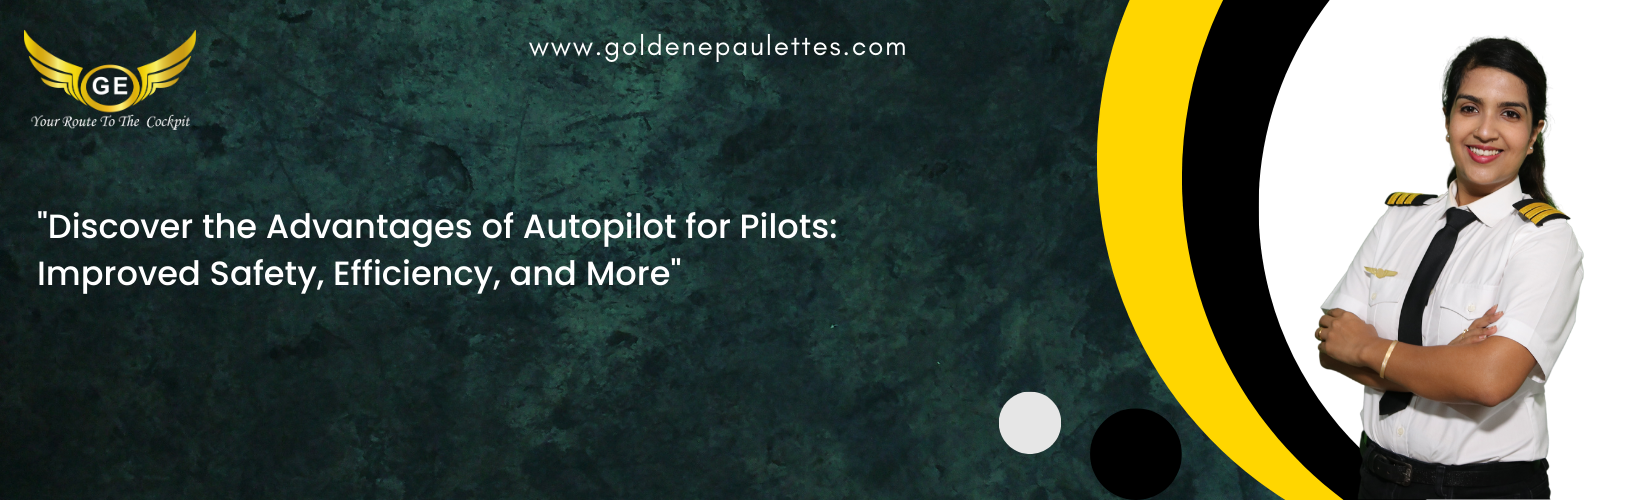 The Benefits of Autopilot for Pilots